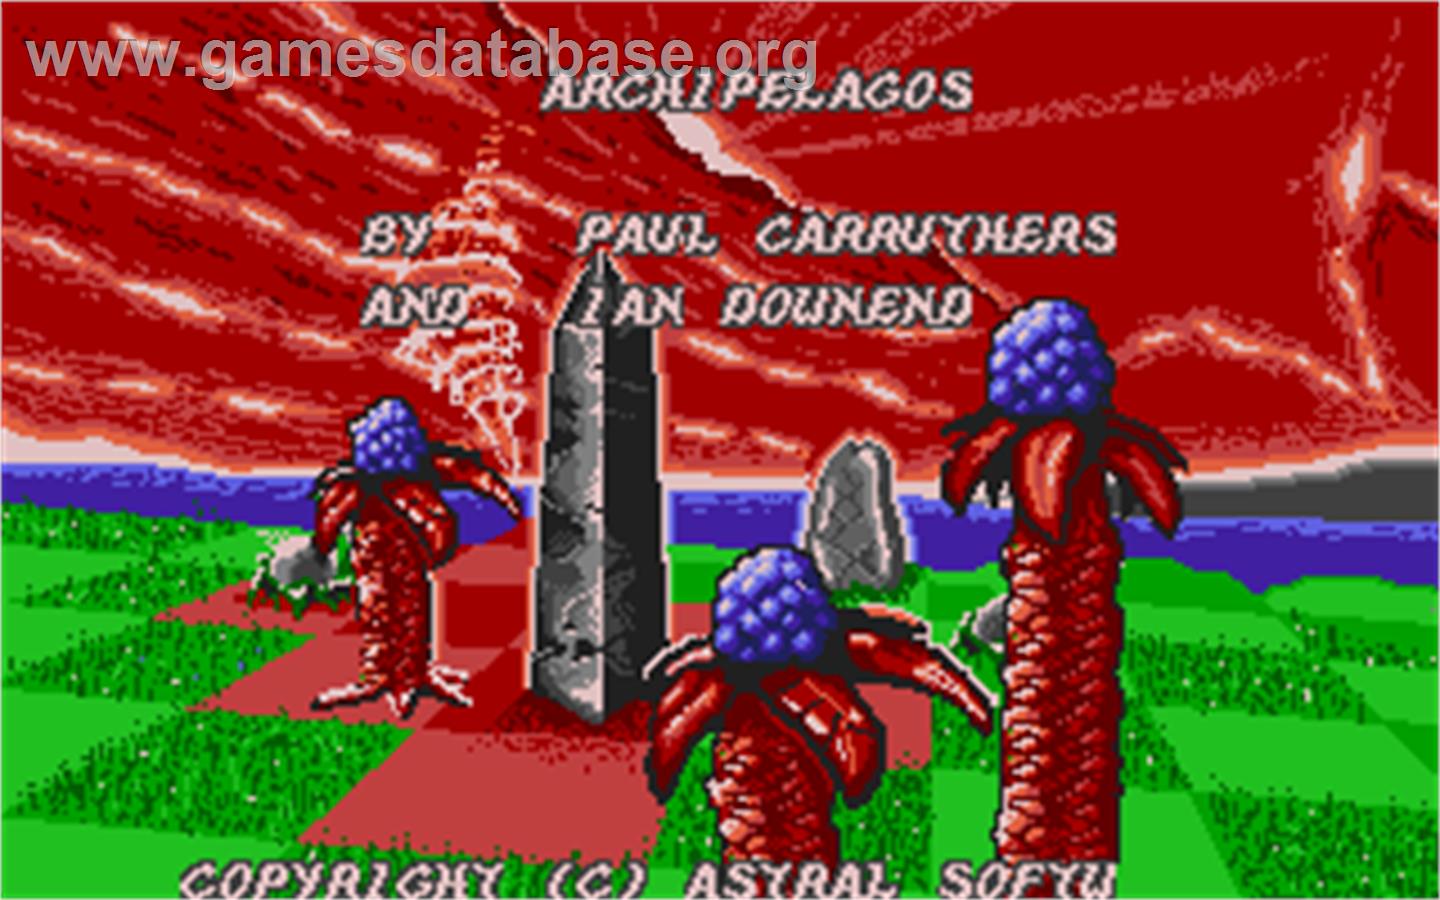 Archipelagos - Atari ST - Artwork - Title Screen